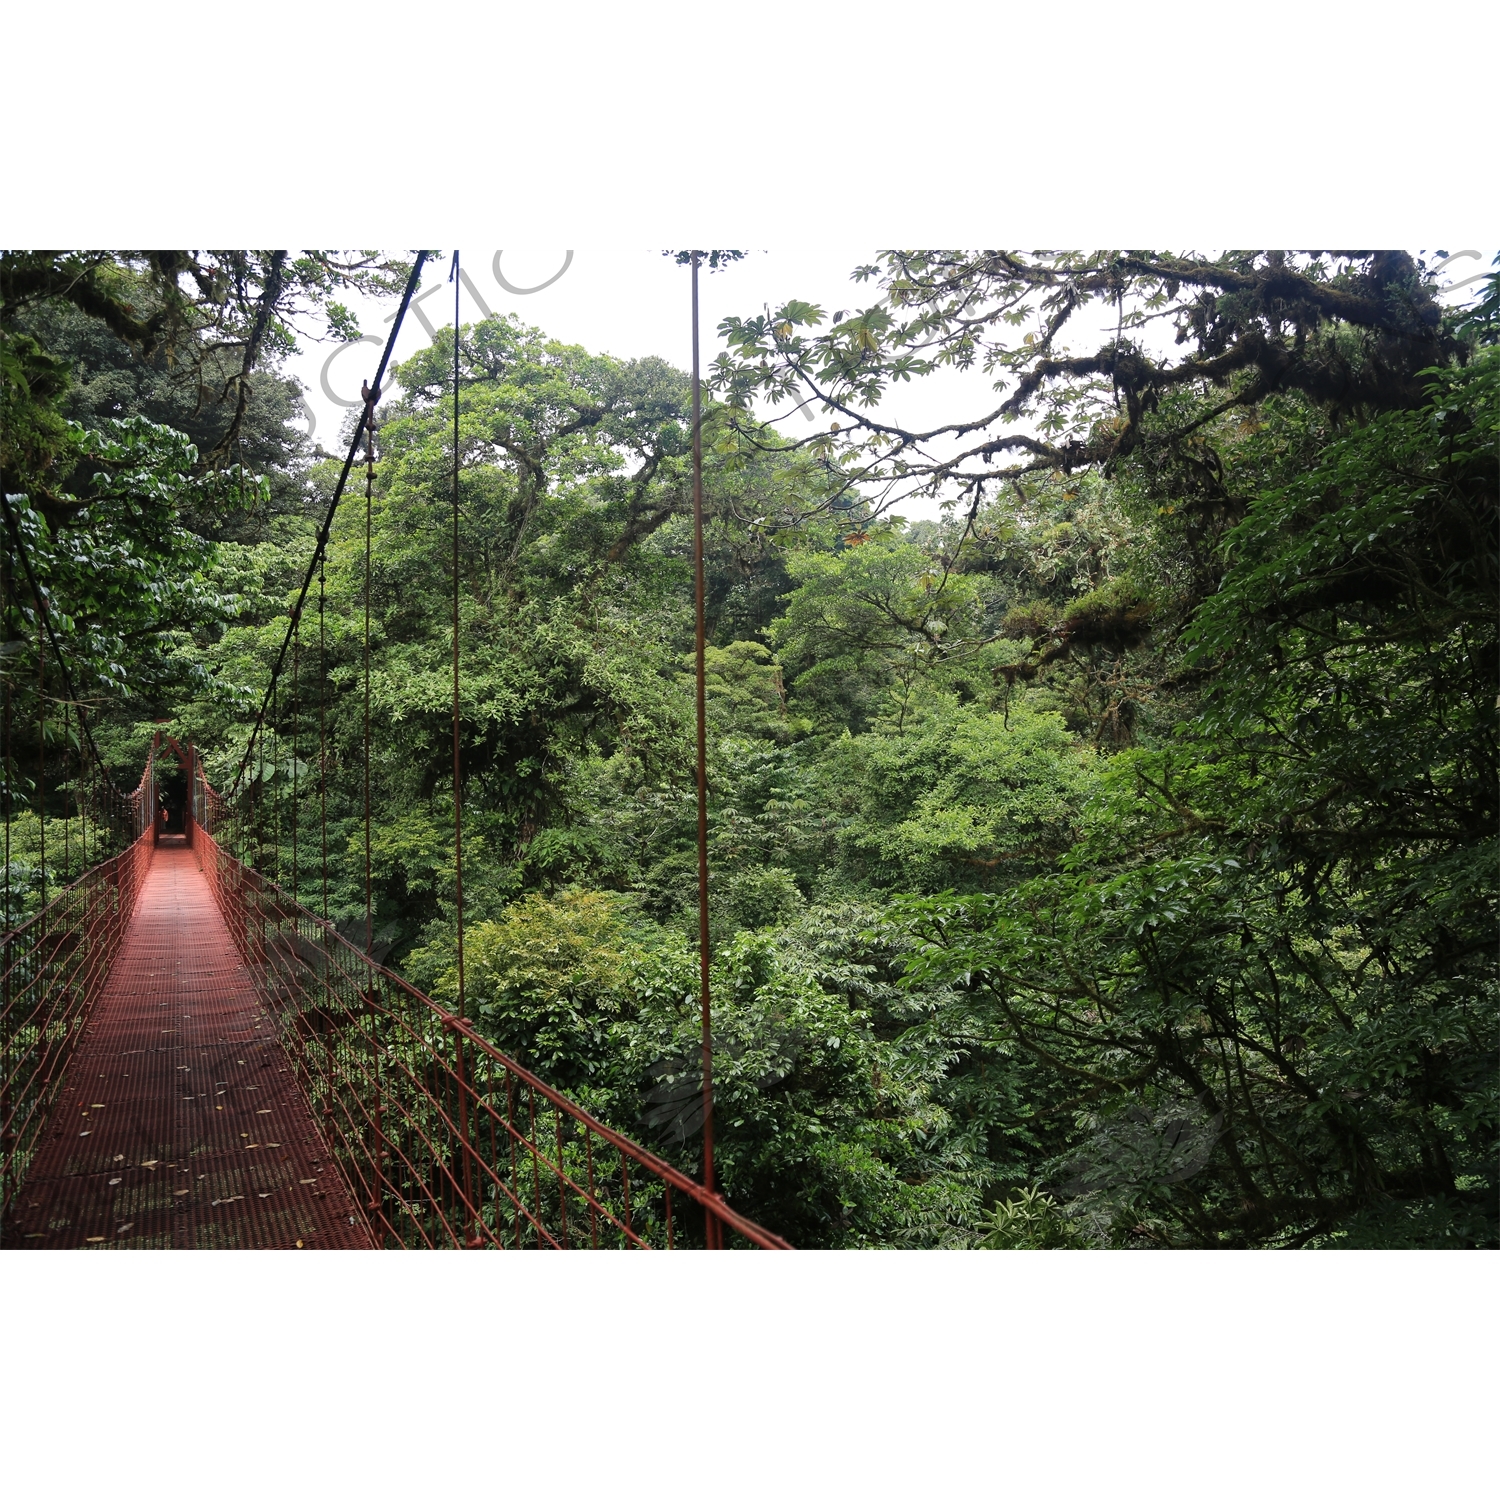 Rainforest and Suspension Bridge in Monteverde Cloud Forest Reserve